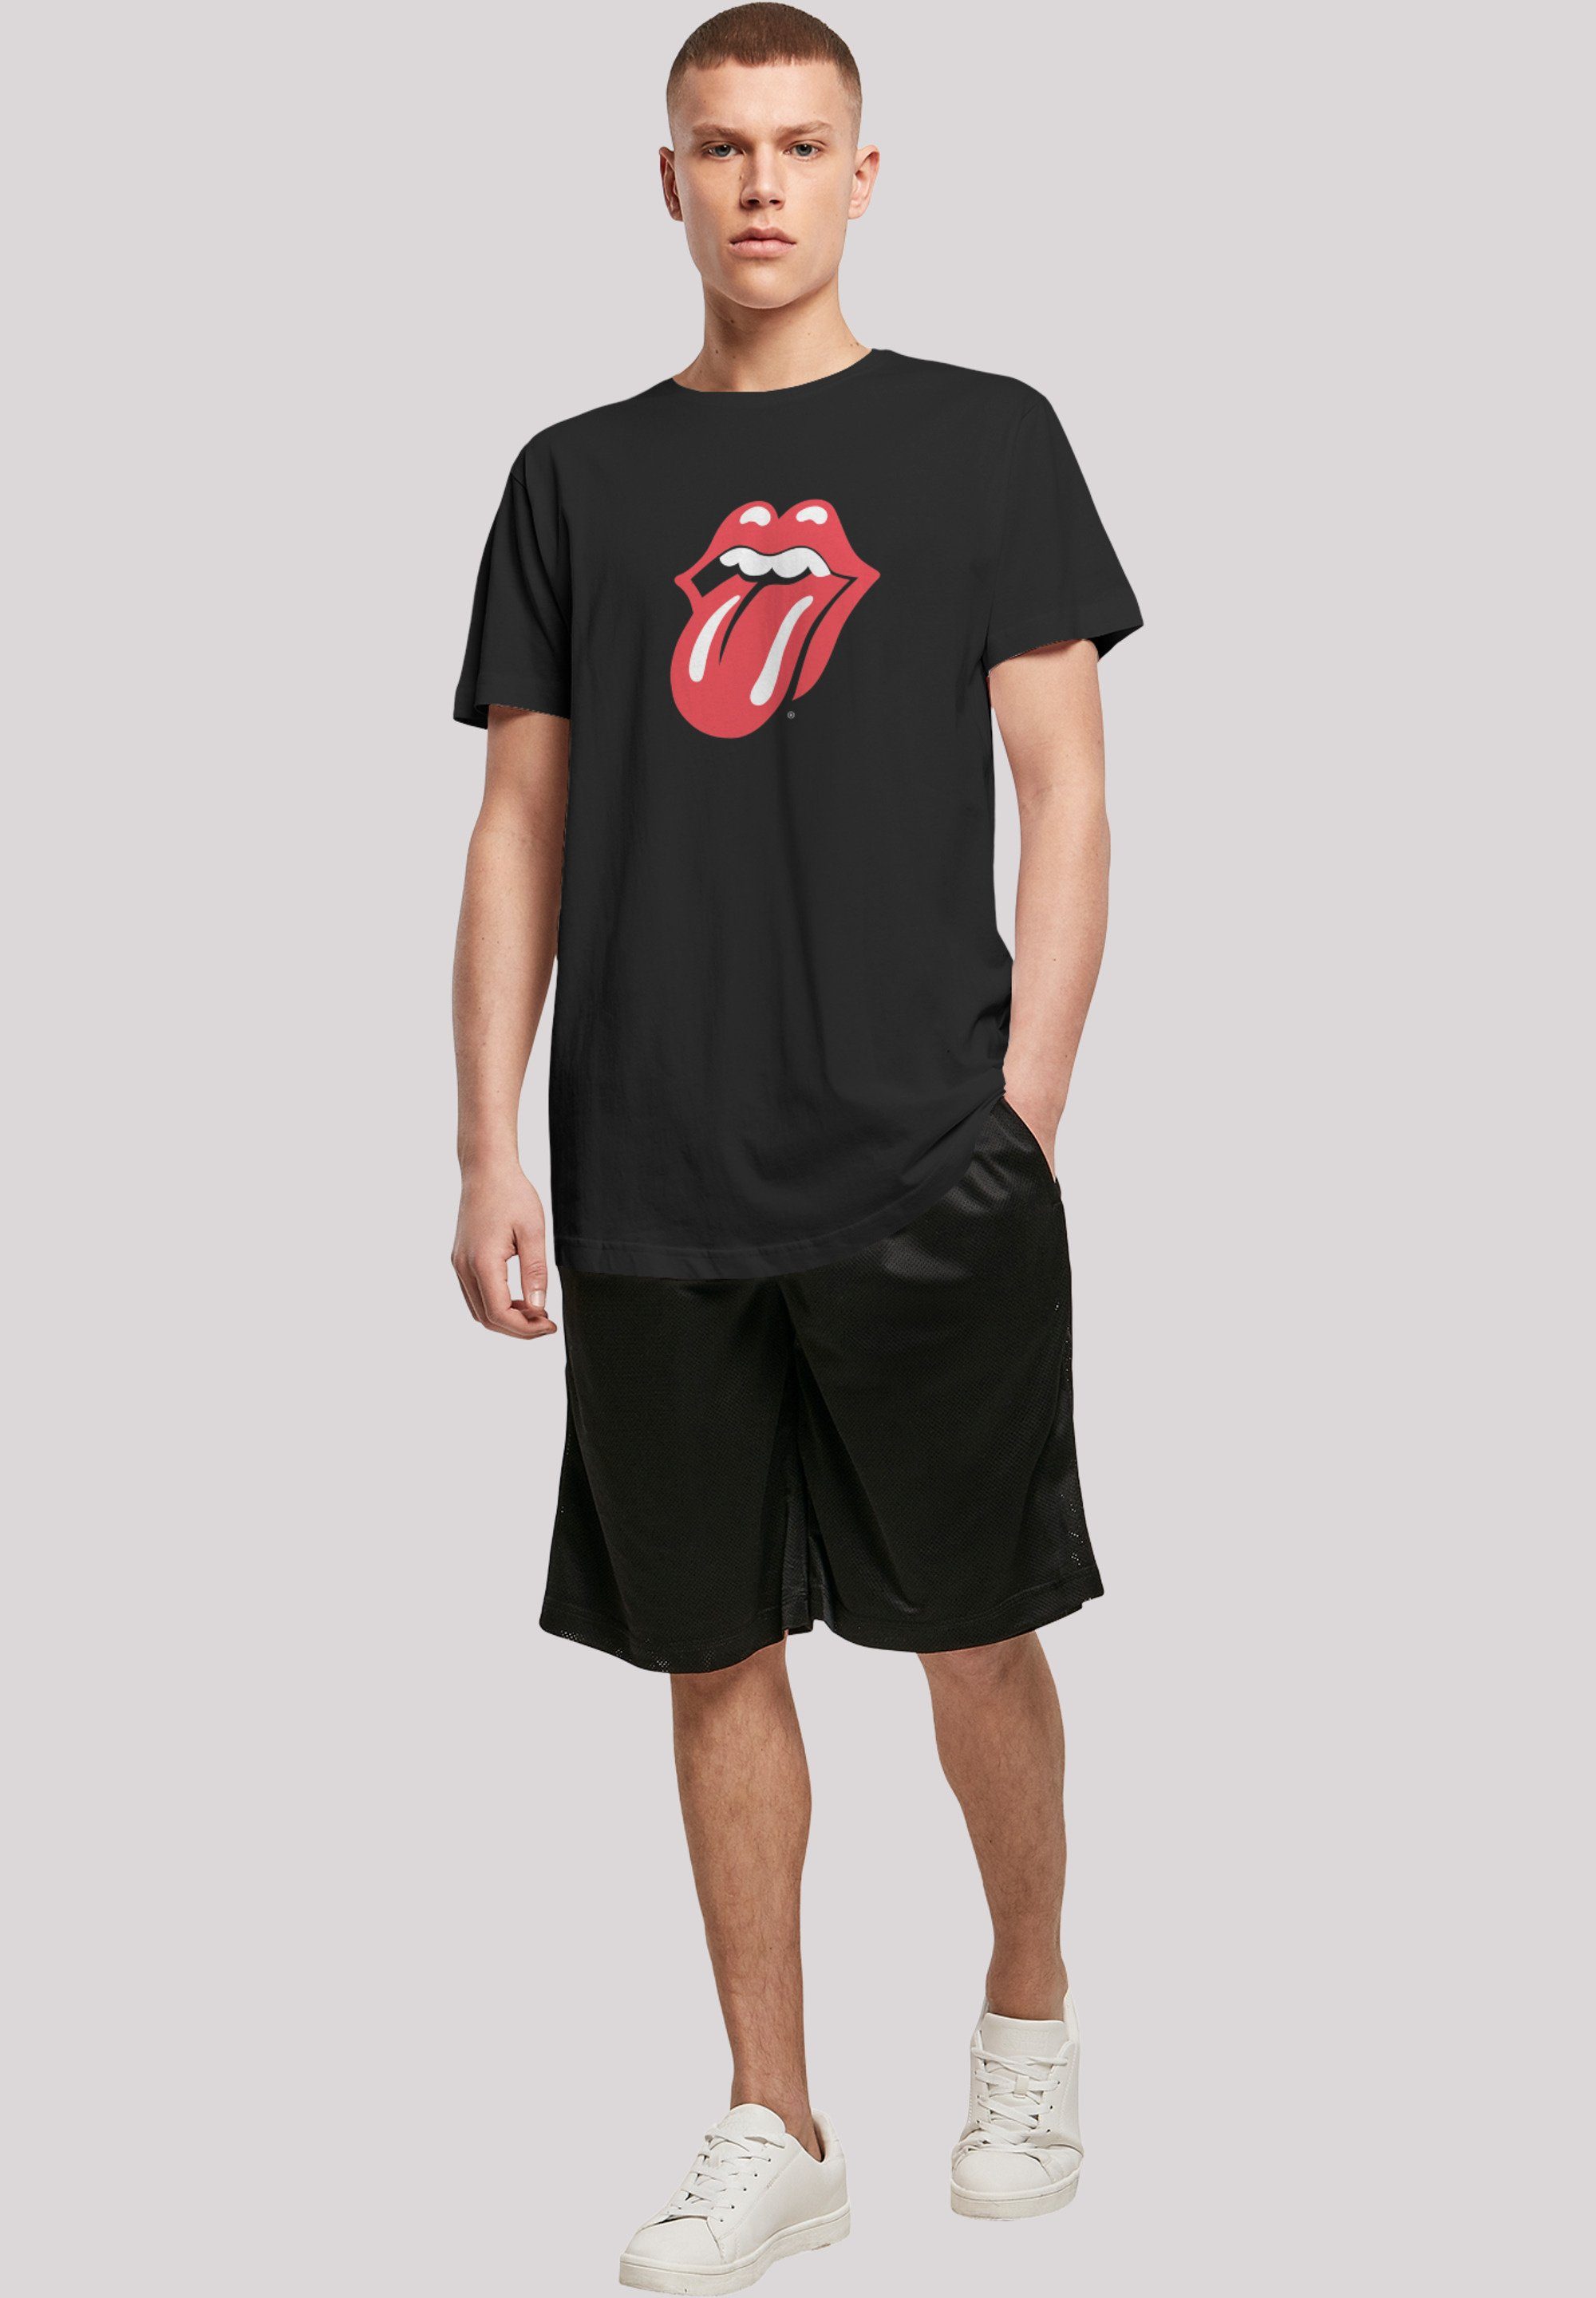 F4NT4STIC T-Shirt The Rolling Classic Stones Black Tongue Print Rockband